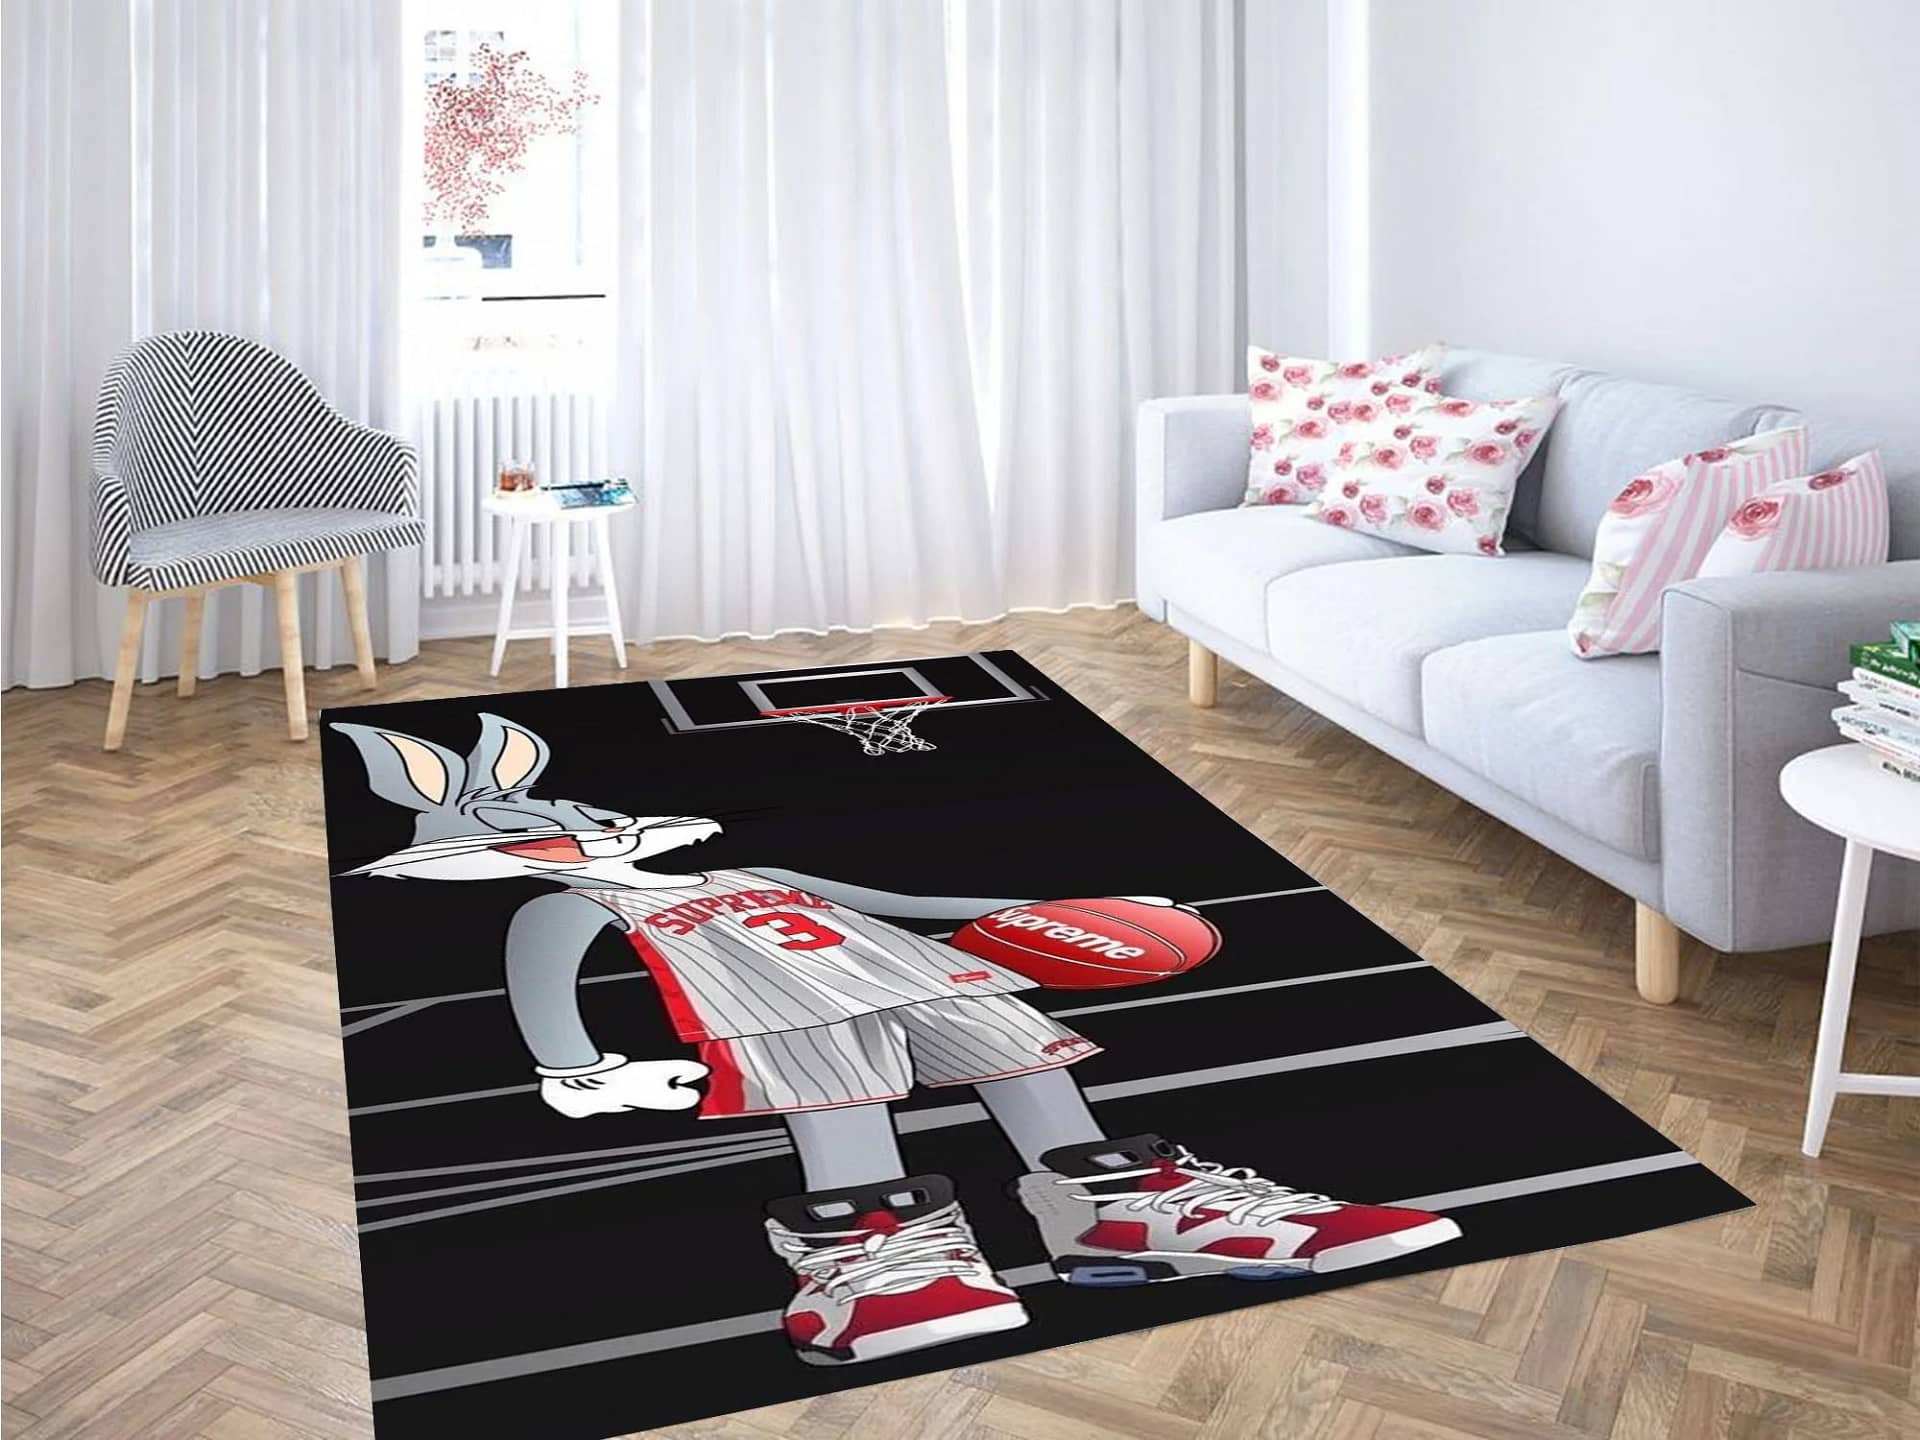 Rabbit Basketball Carpet Rug